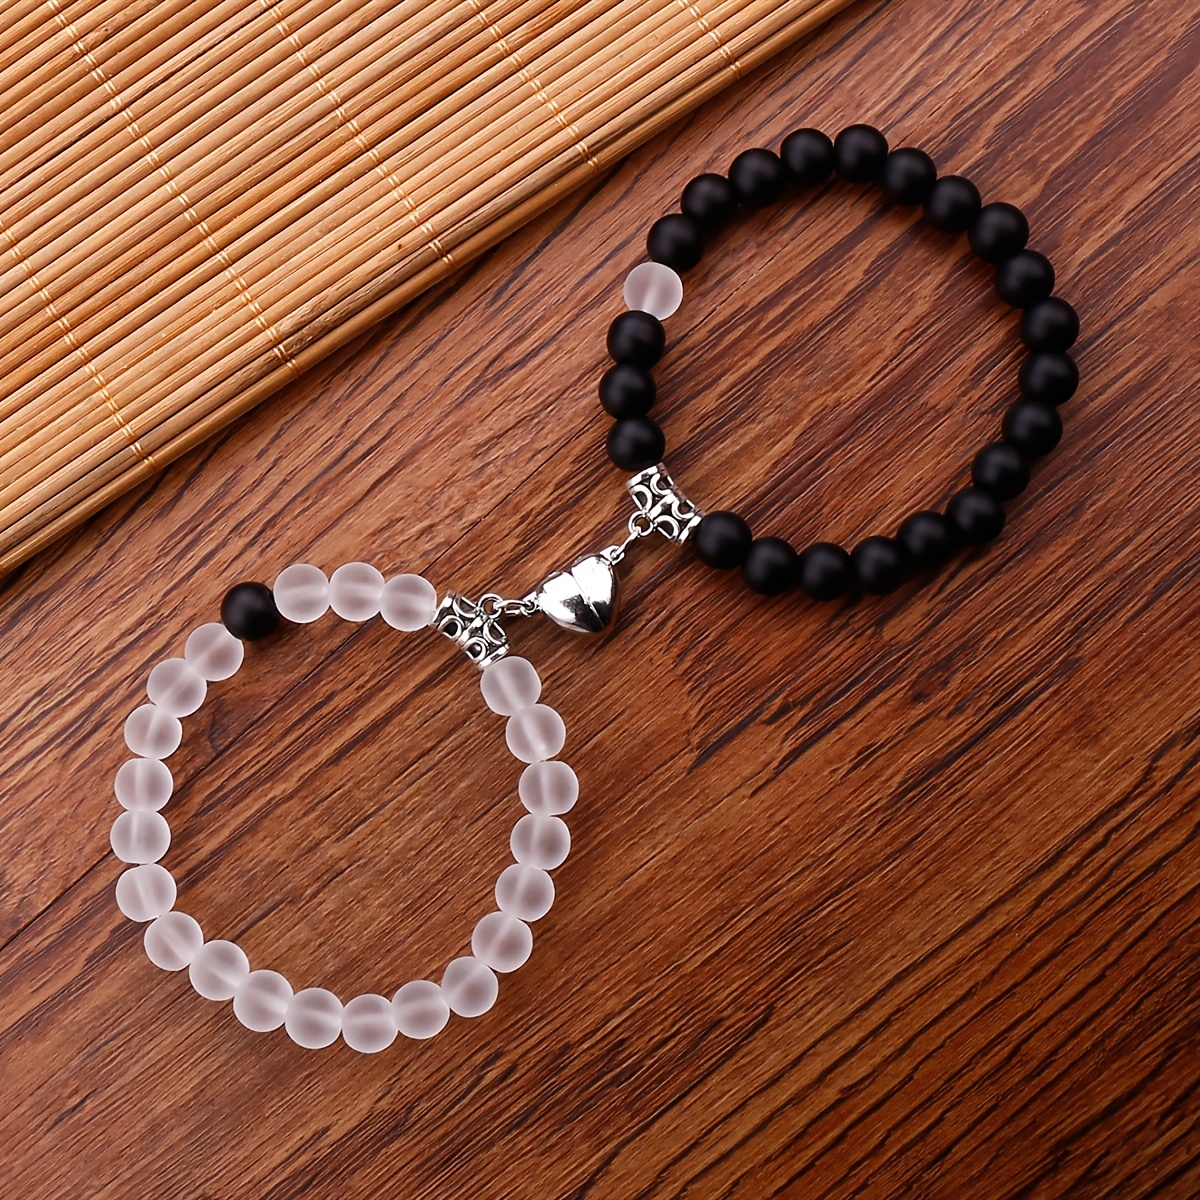 Leatic Magnetic Couple Bracelets Relationship Distance Bracelet Heart Energy Stone Beads Gemstone Beaded Agate Bracelet Matching Bracelets for